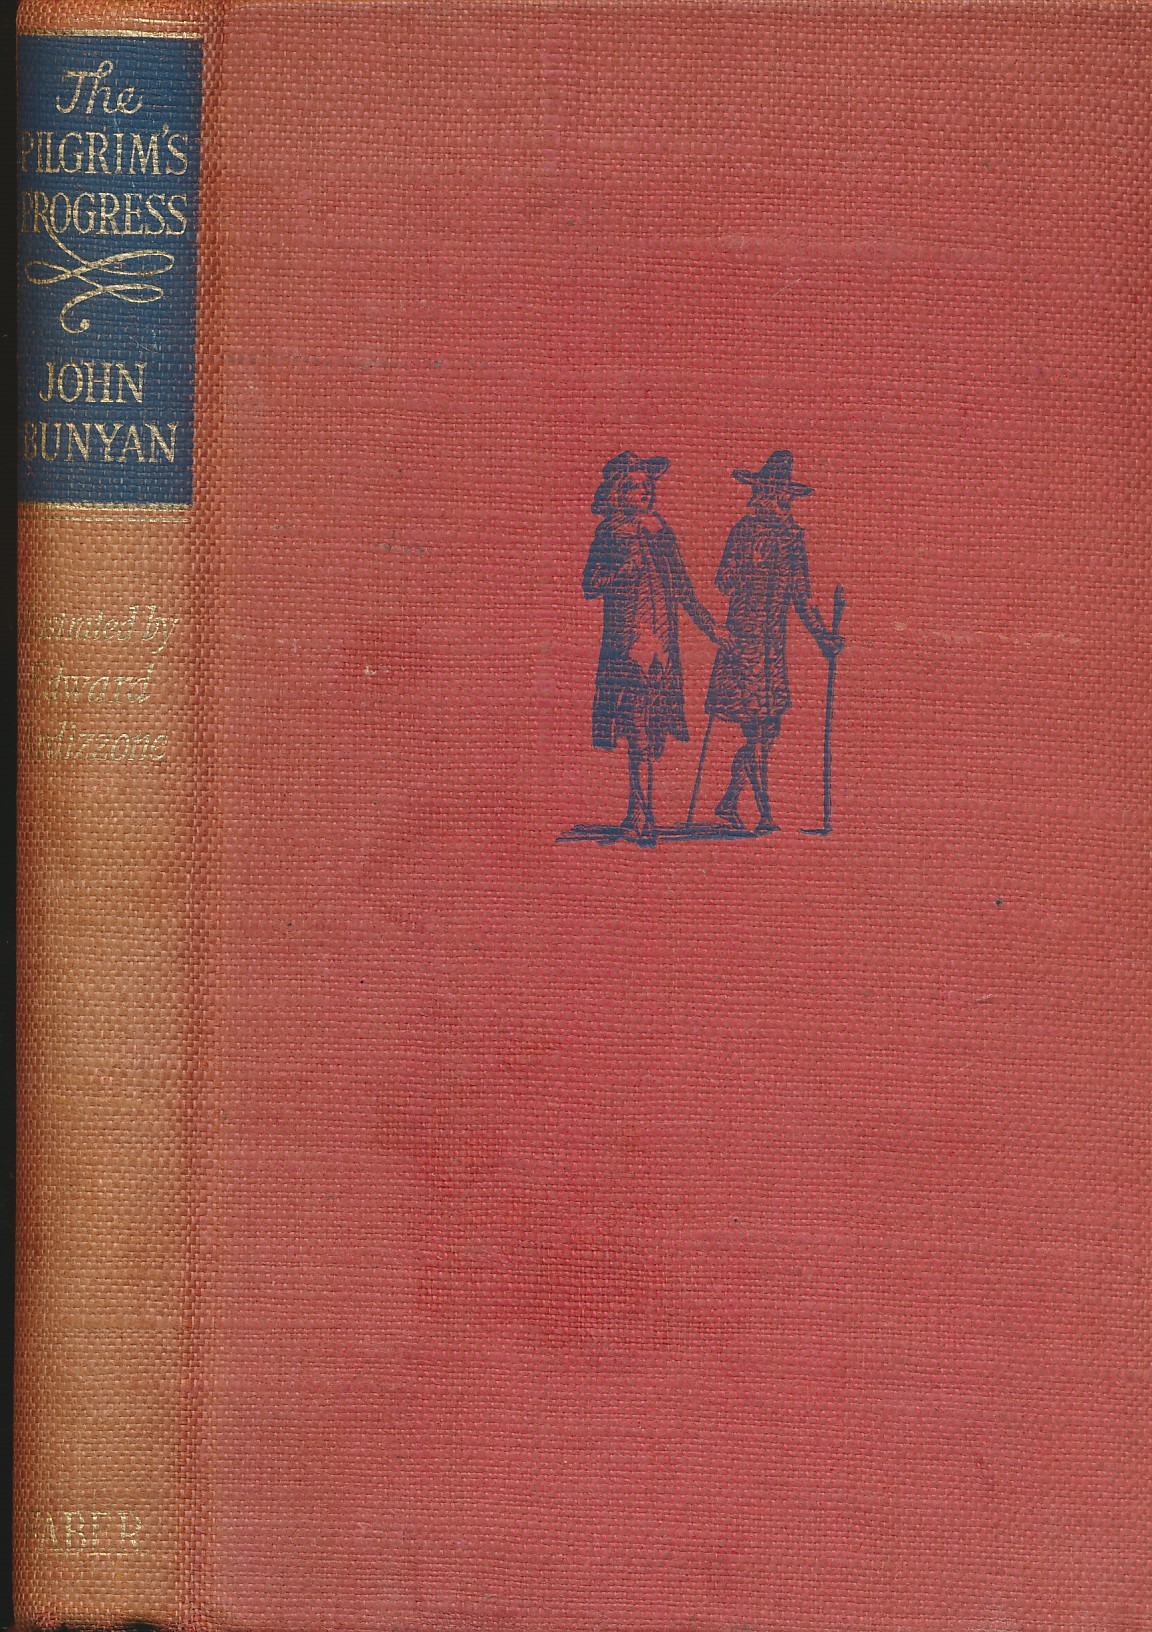 The Pilgrim's Progress. Faber Edition. 1947.